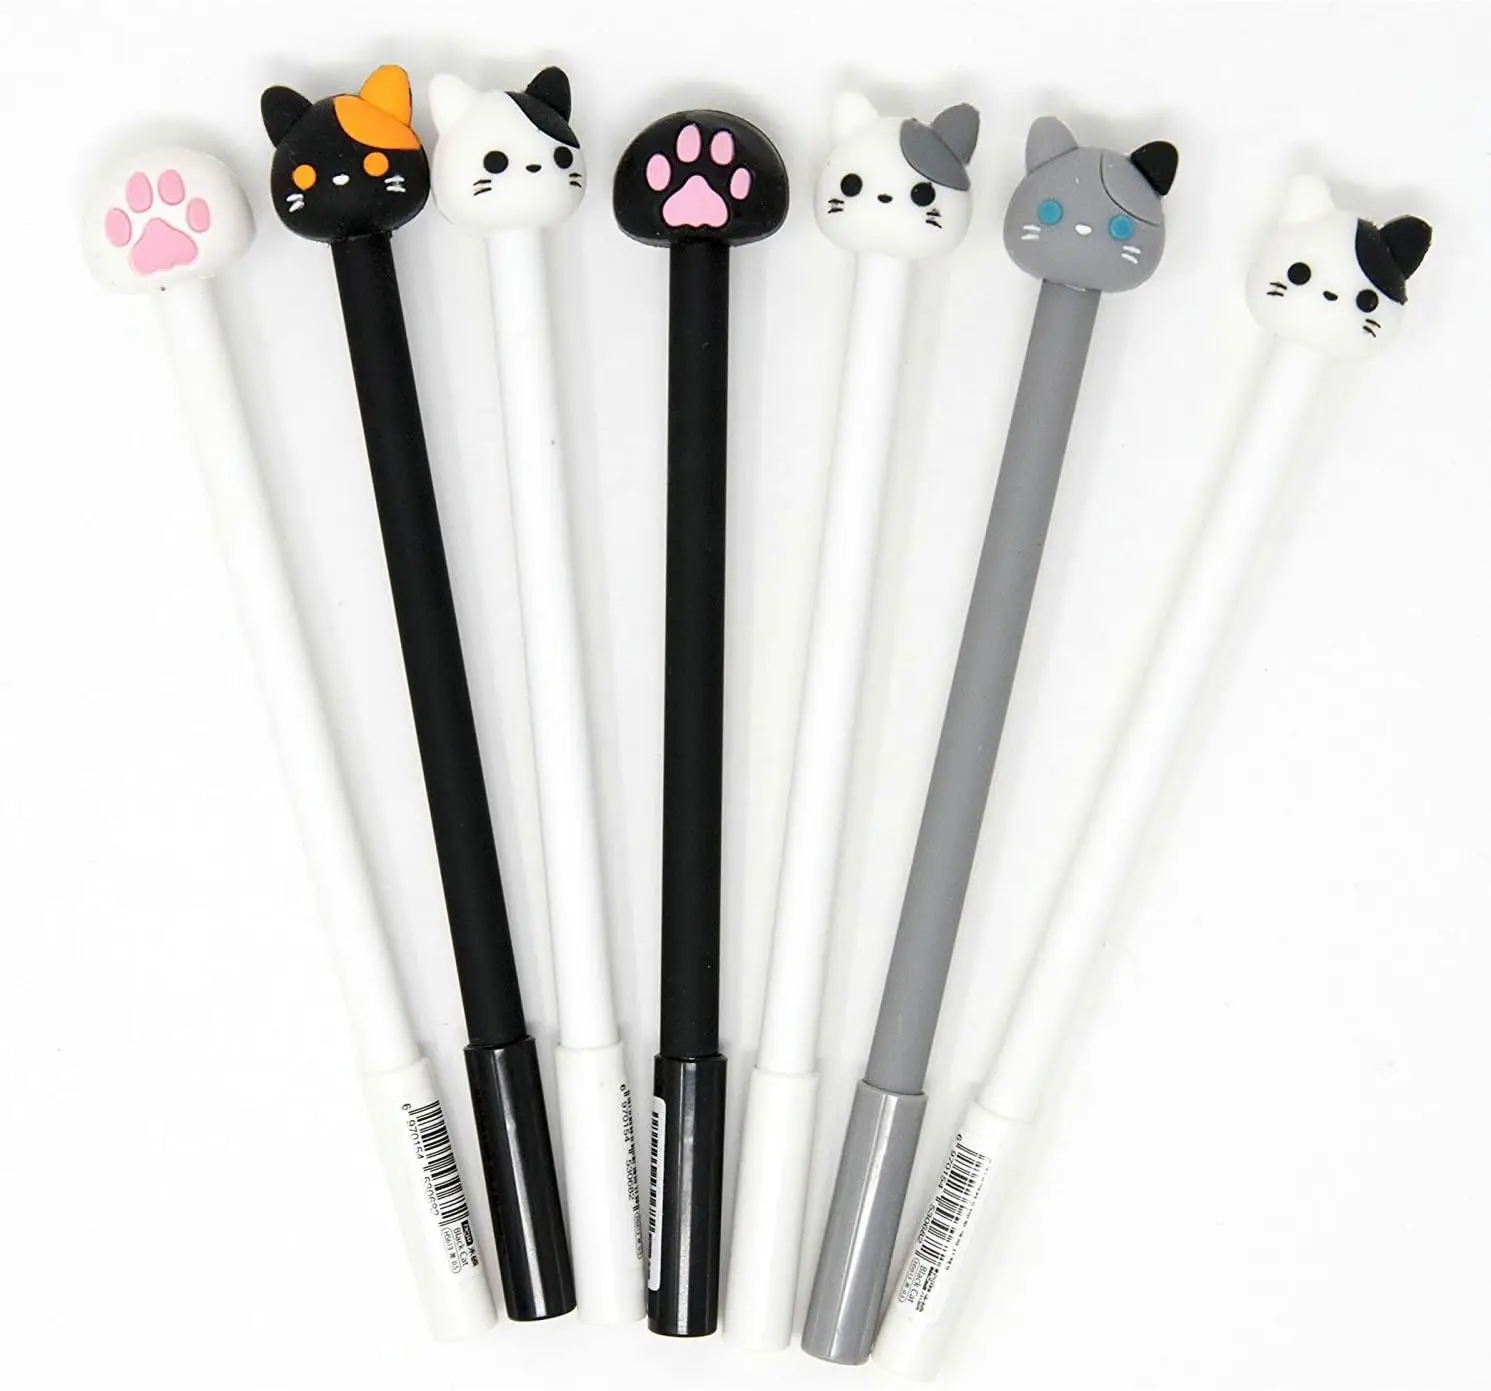 24 Pcs Gel Pens Set Fashion Cute Colorful Cute Kawaii Lovely Dog Cat Paw Claw Gel Ball Pens Office School Supply Stationery